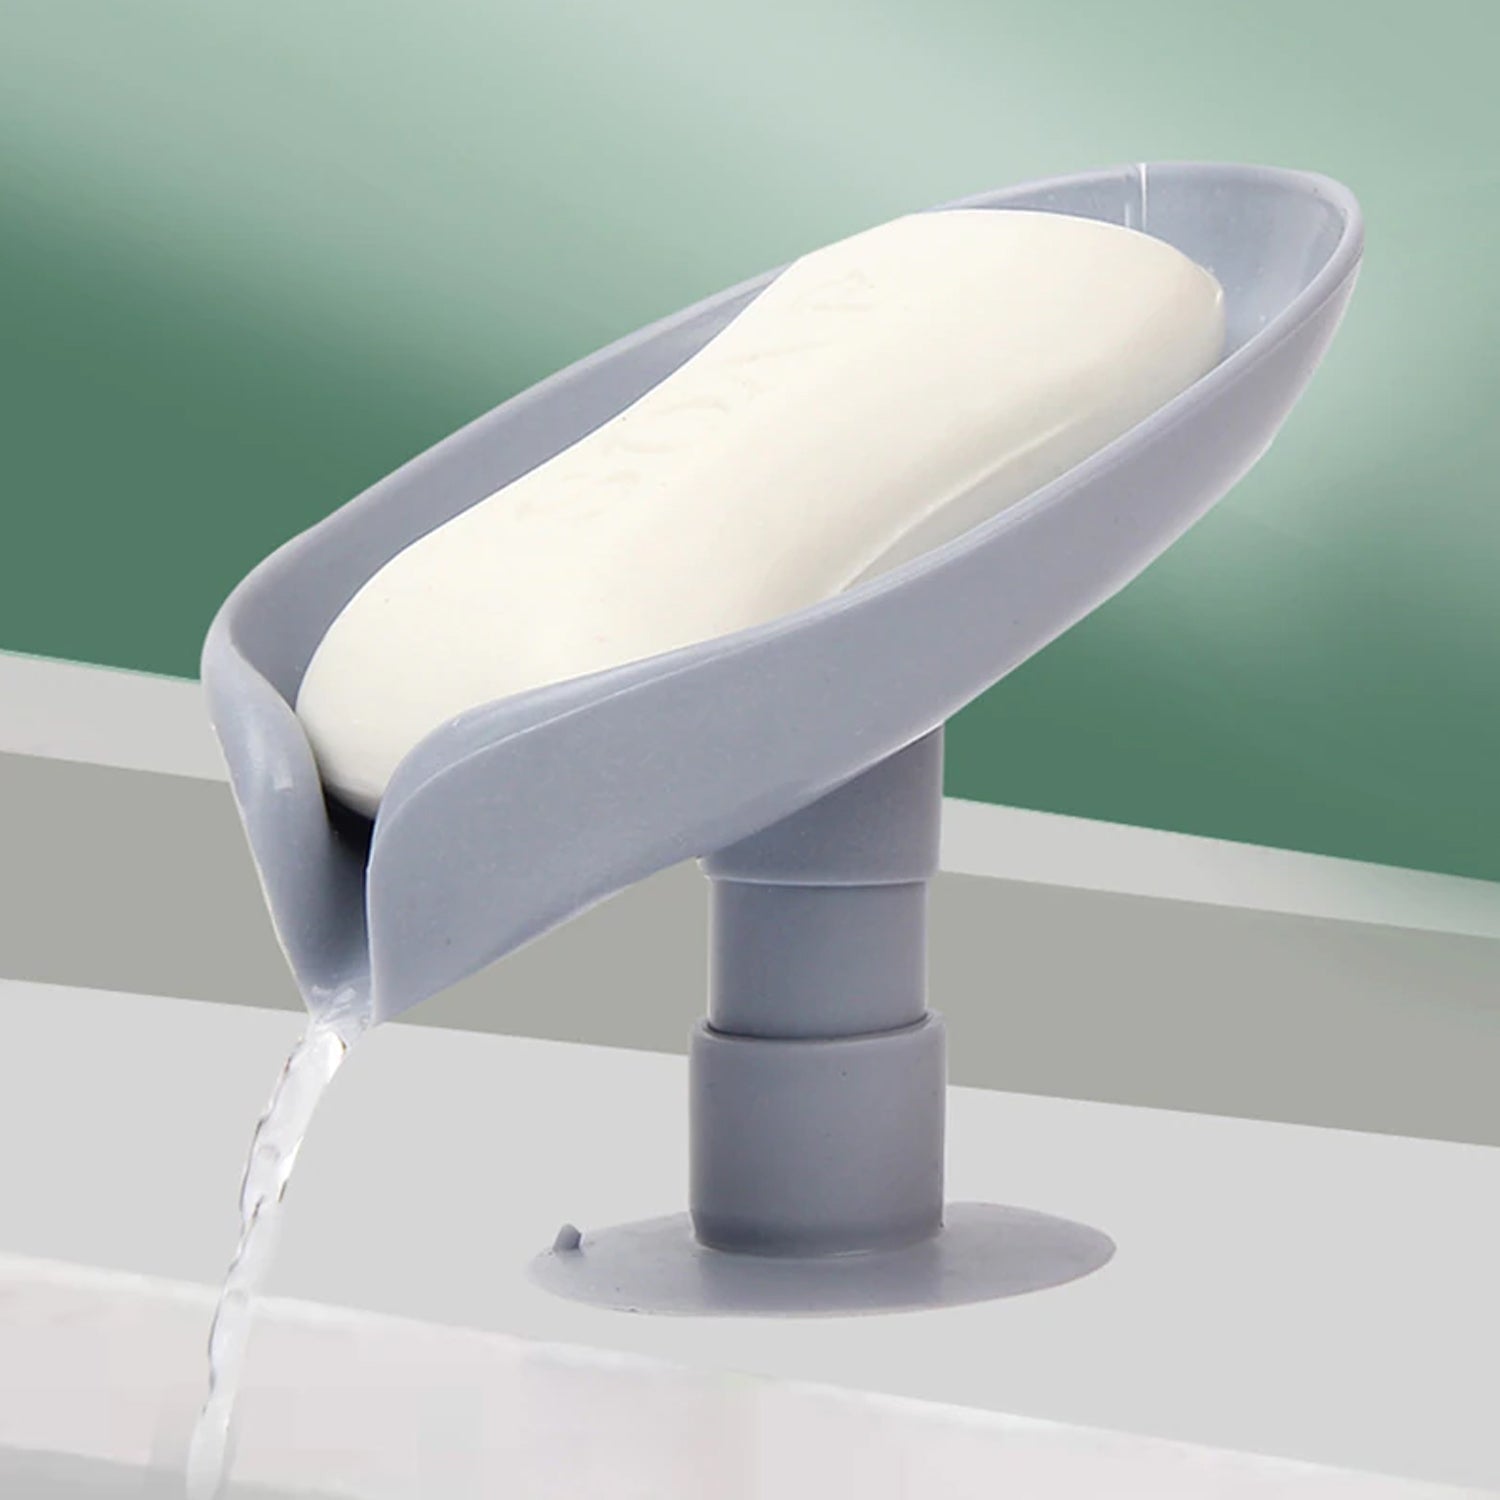 4831 Self Draining Soap Holder for Bathroom Leaf Shape Soap Dish Kitchen Soap Tray freeshipping - DeoDap